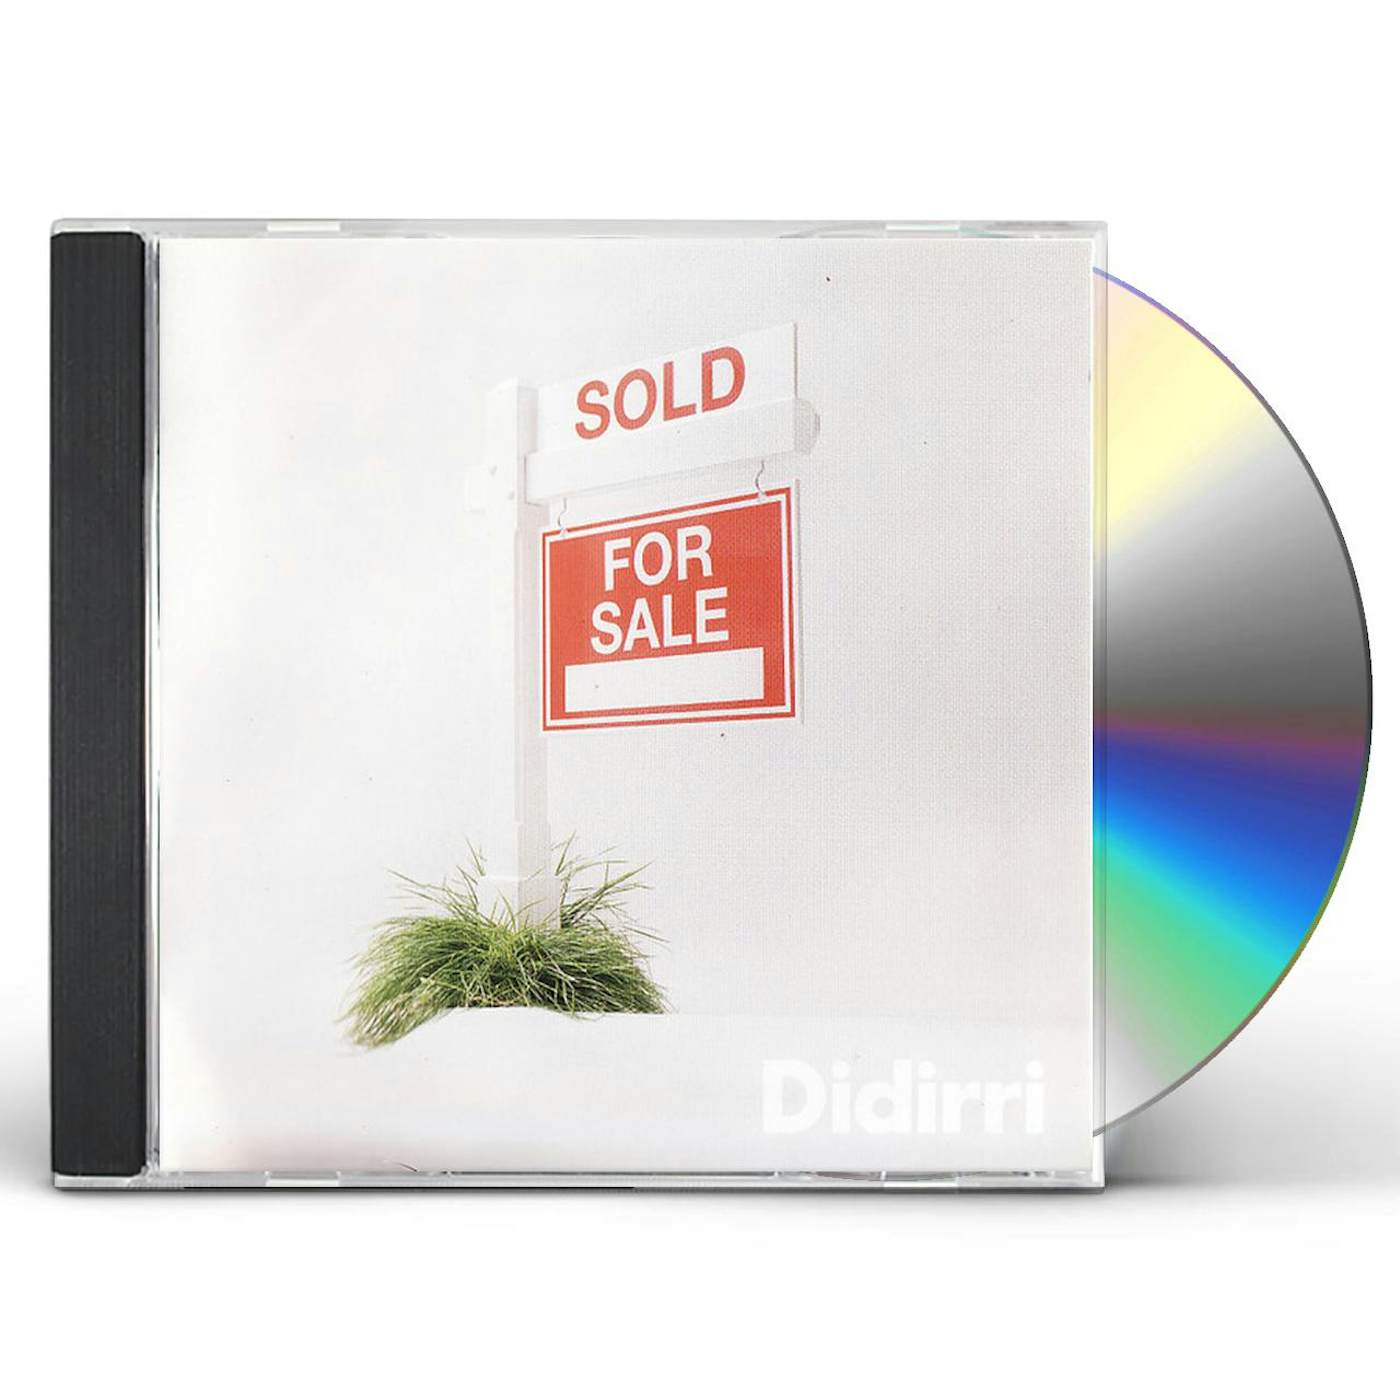 Didirri SOLD FOR SALE CD